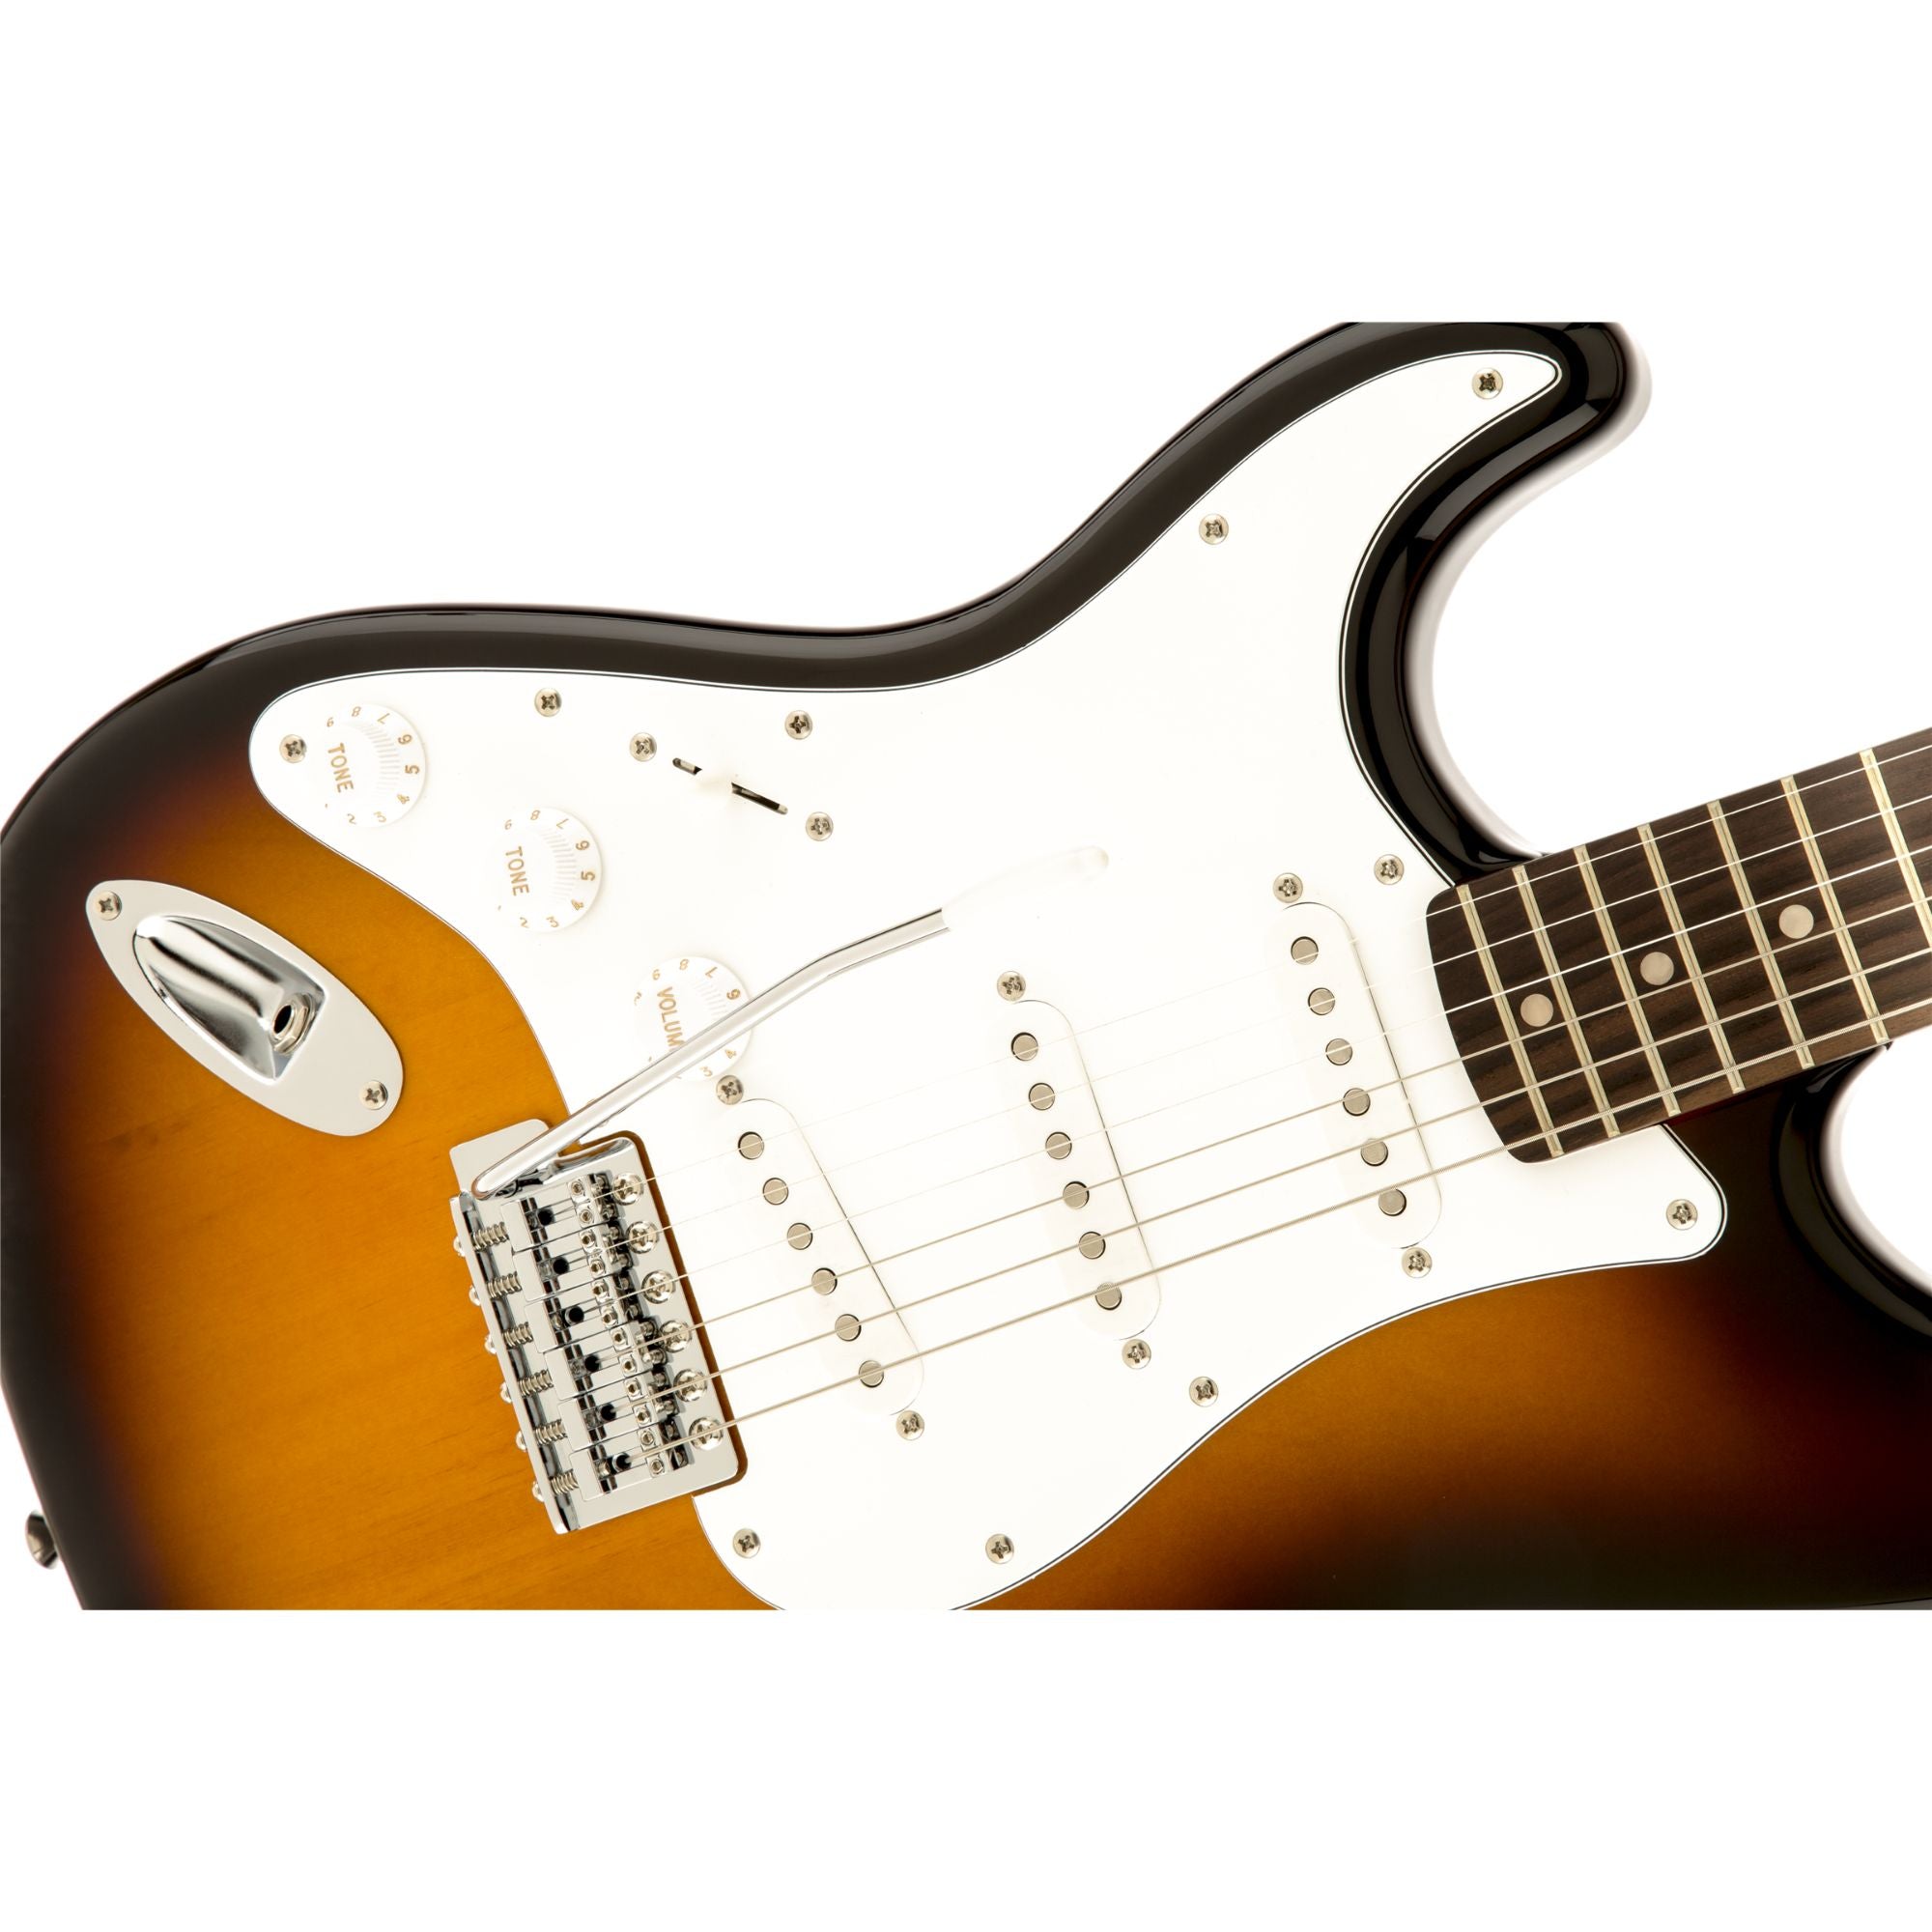 Squier Affinity Series Stratocaster, Left-Handed, Brown Sunburst